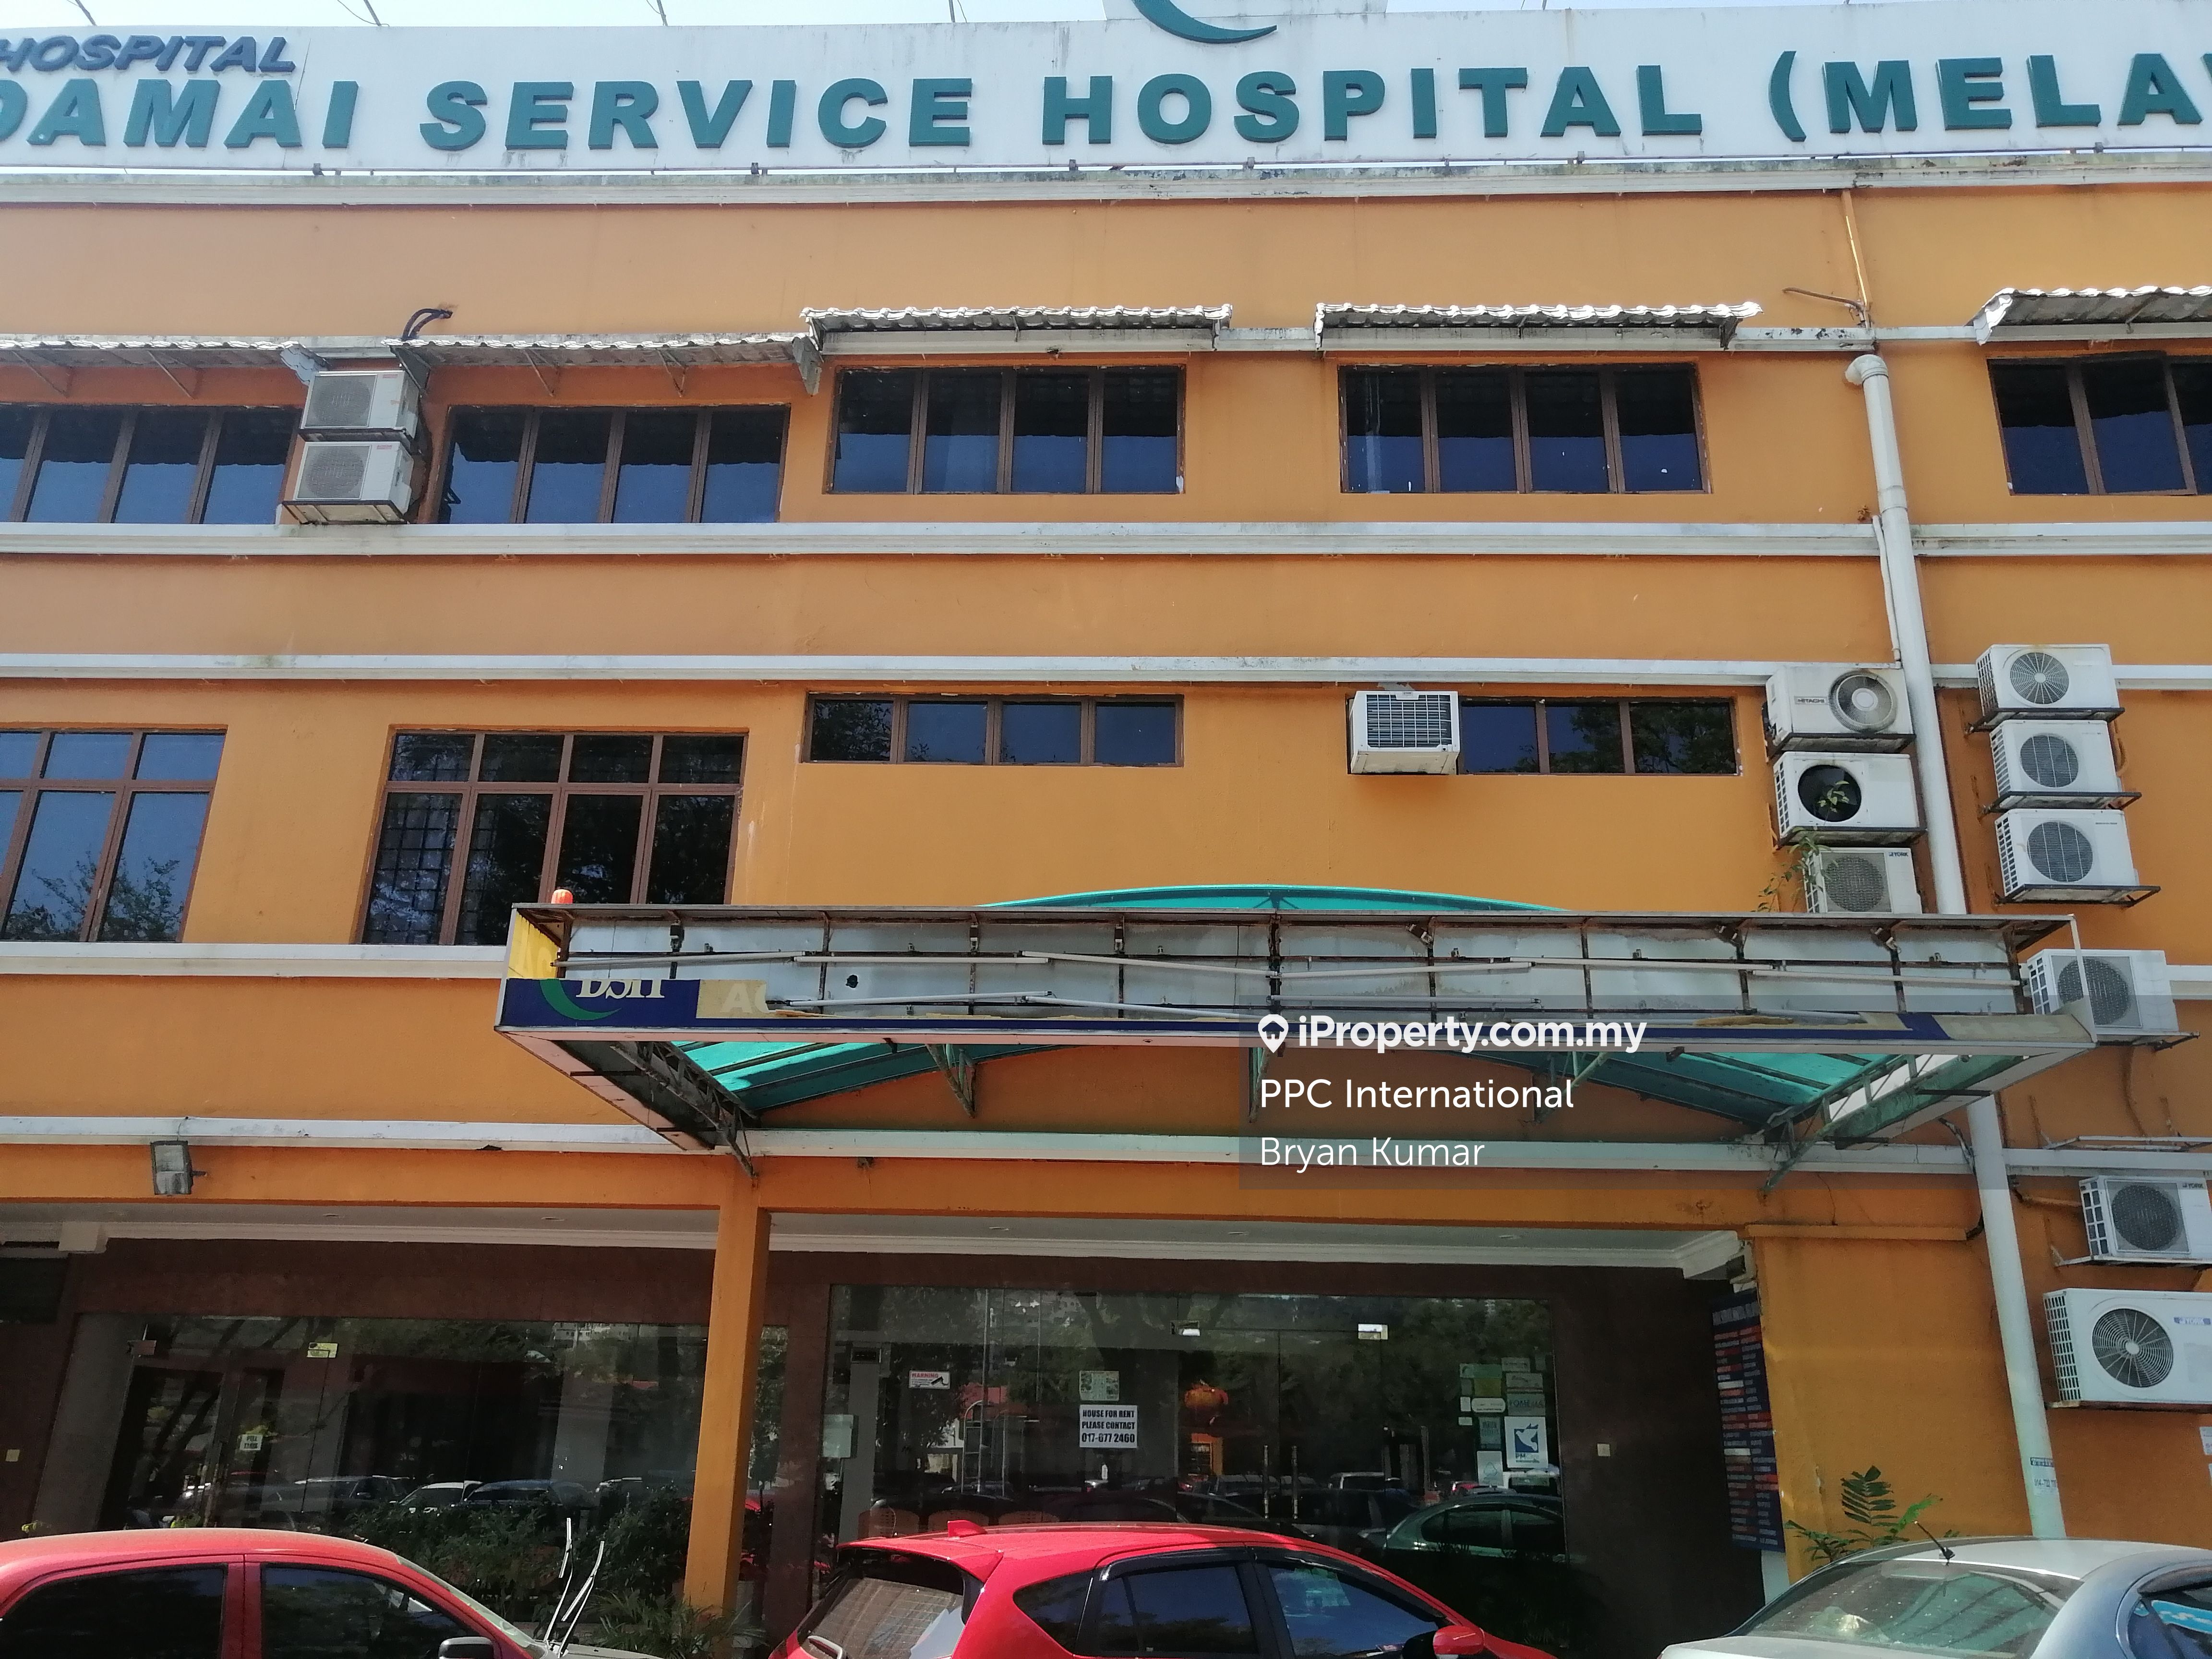 Melawati damai service hospital KEMENSAH HEIGHTS